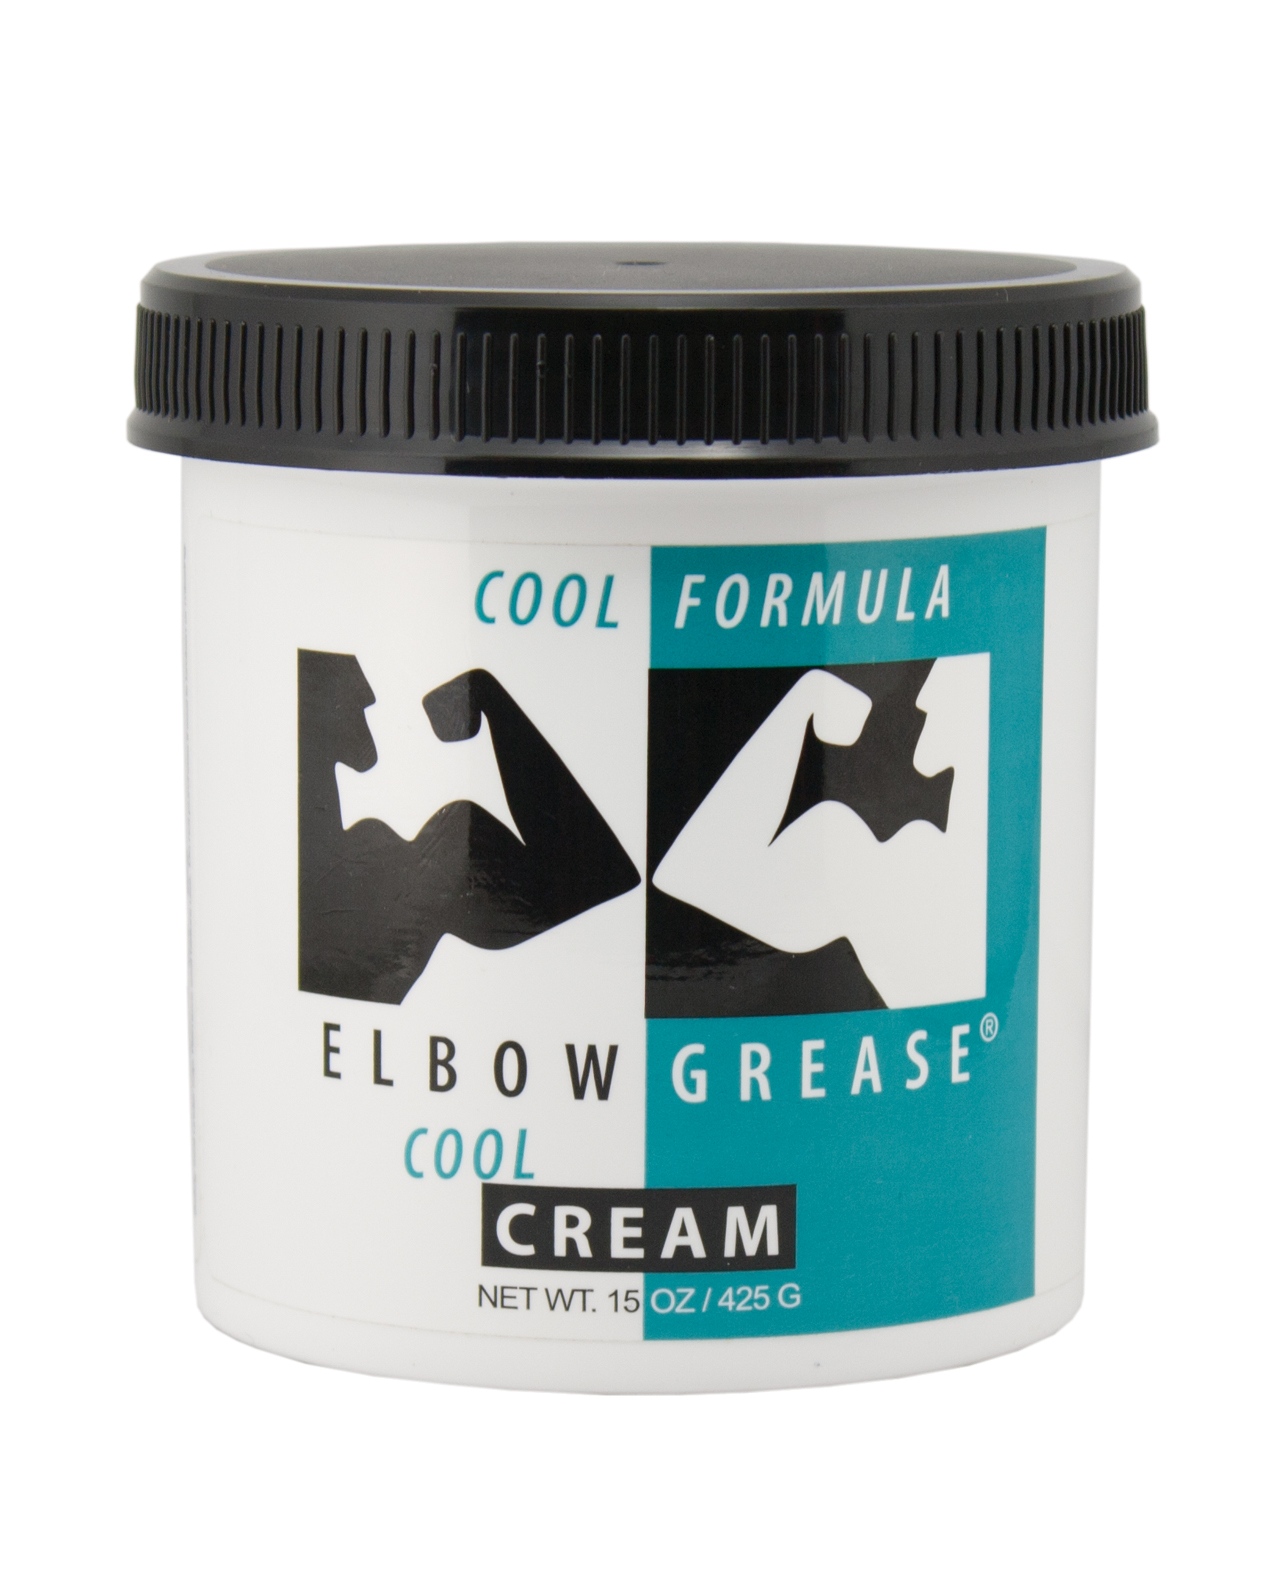 Elbow Grease Cool Cream - 15 oz jar